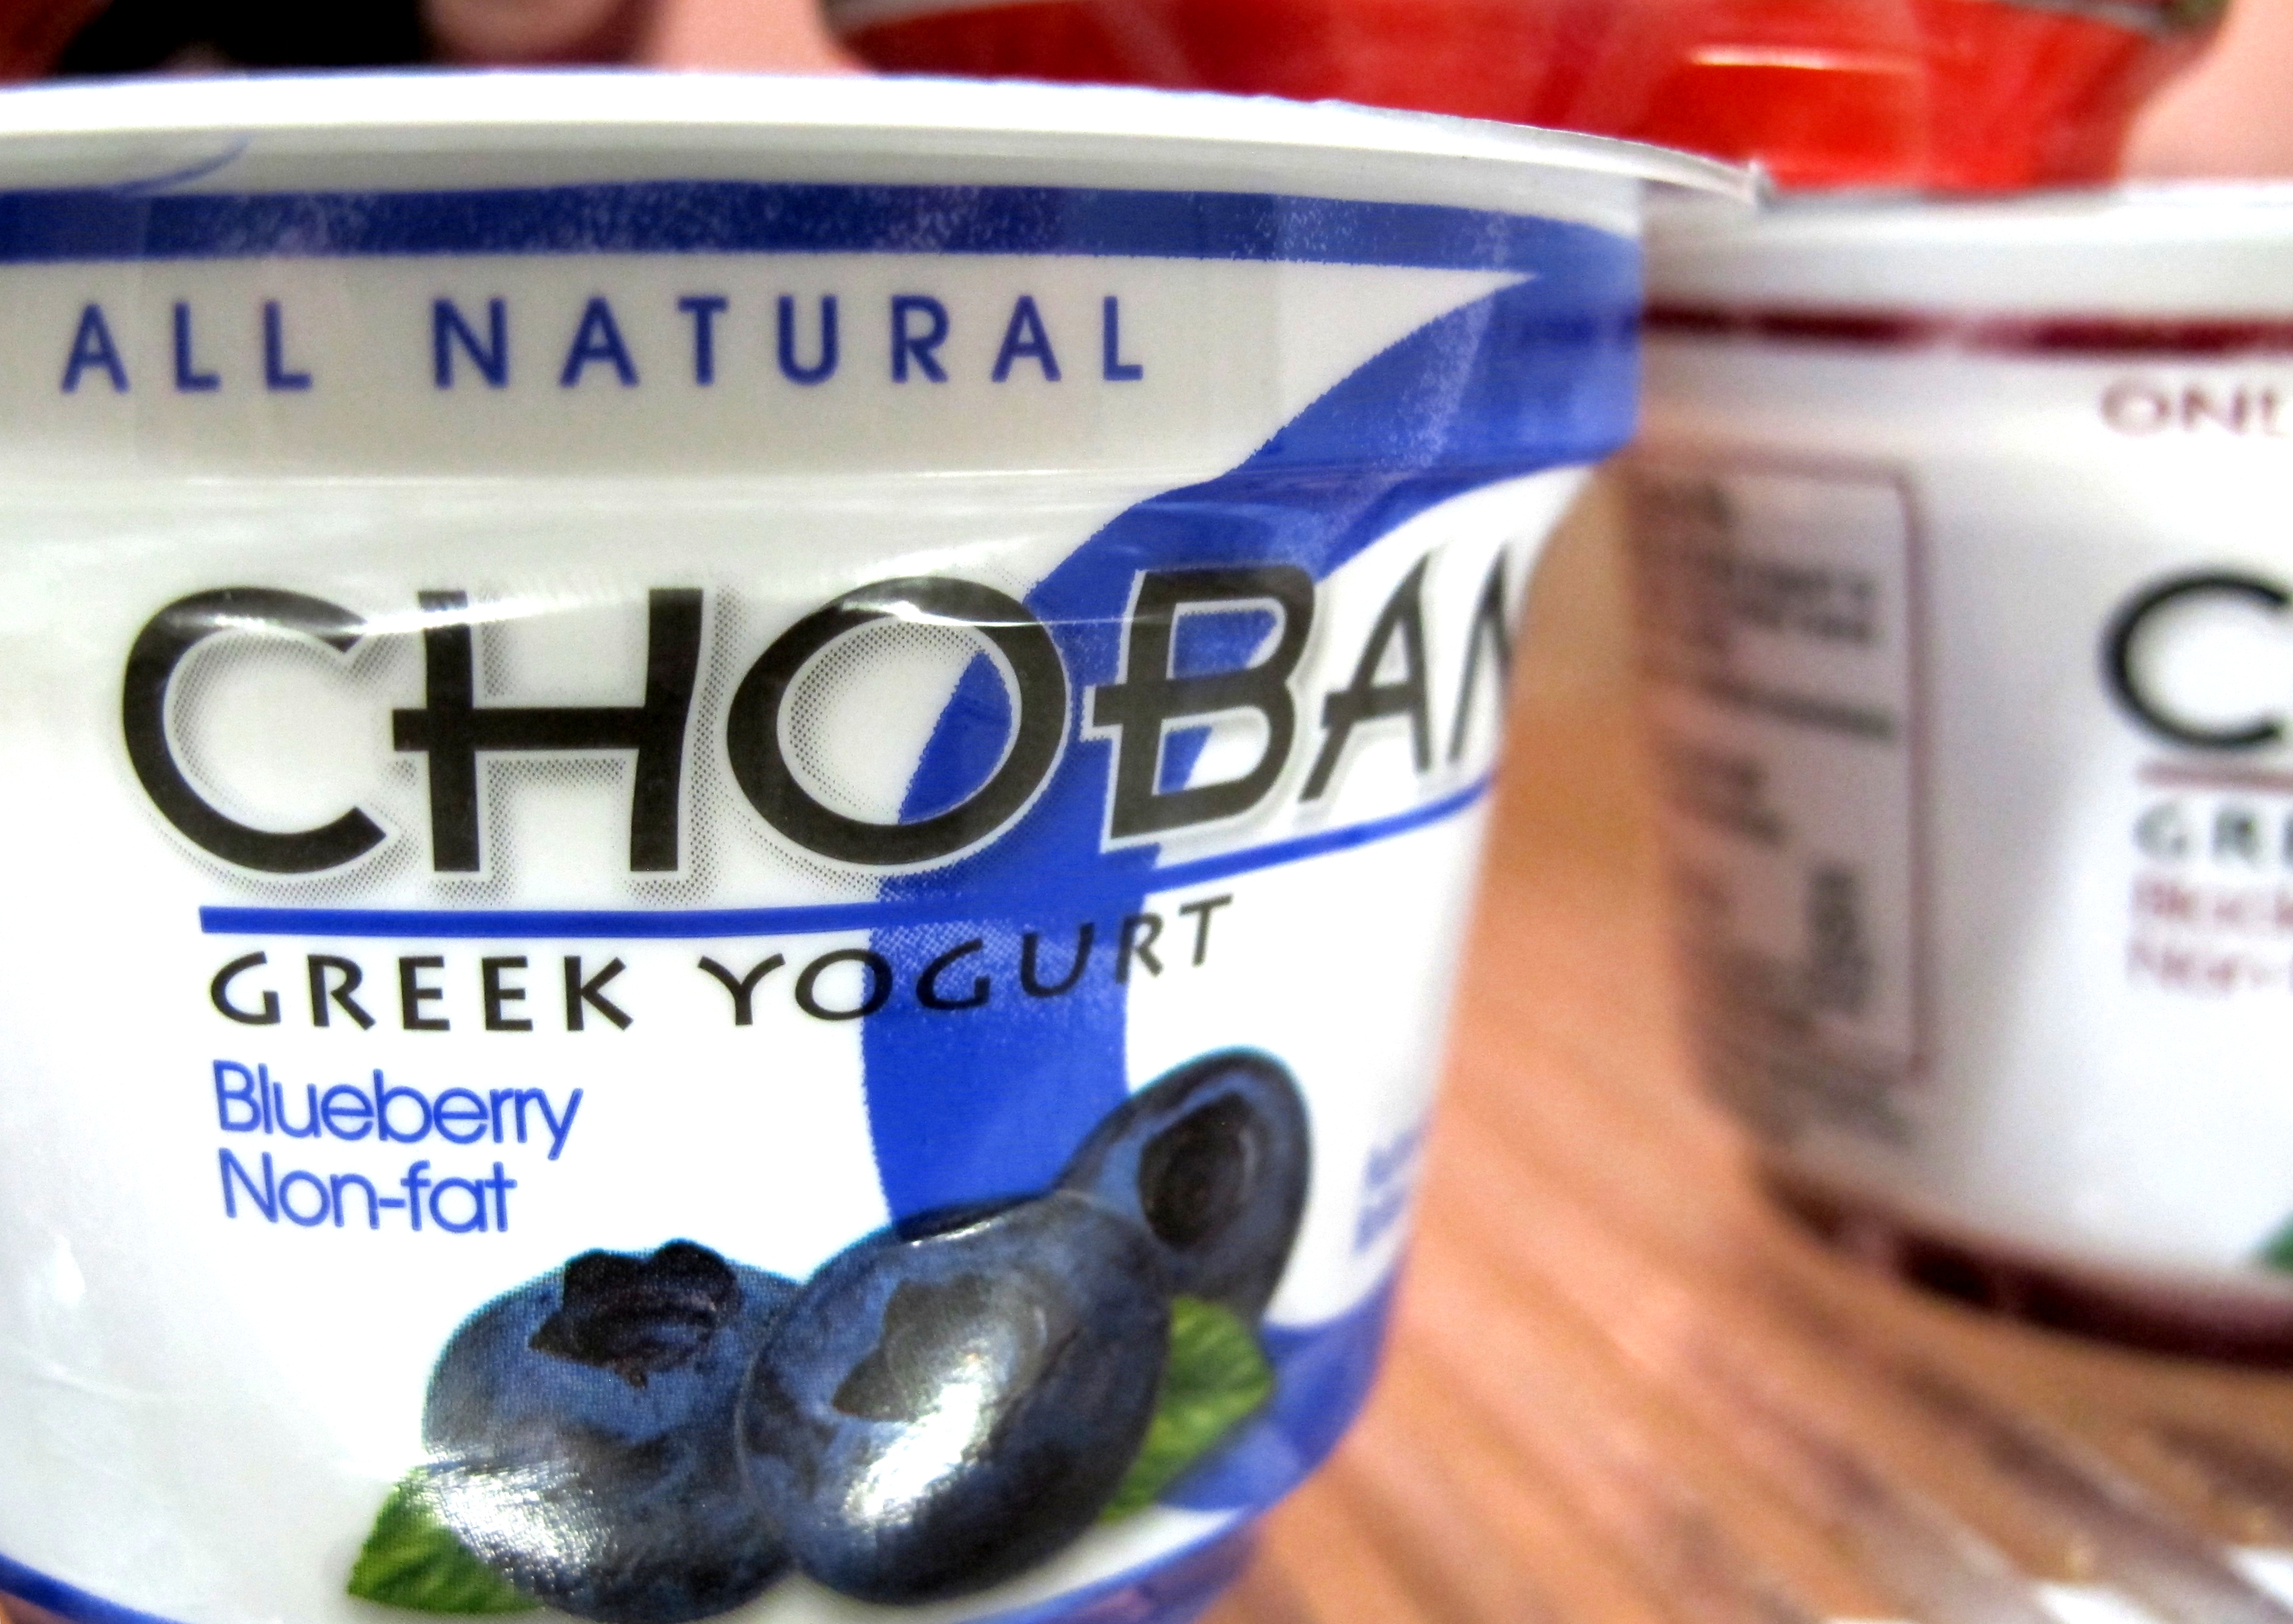 maker yogurt jobs Twin What Chobani Today, Cost Facility At Yogurt But Opens To Falls